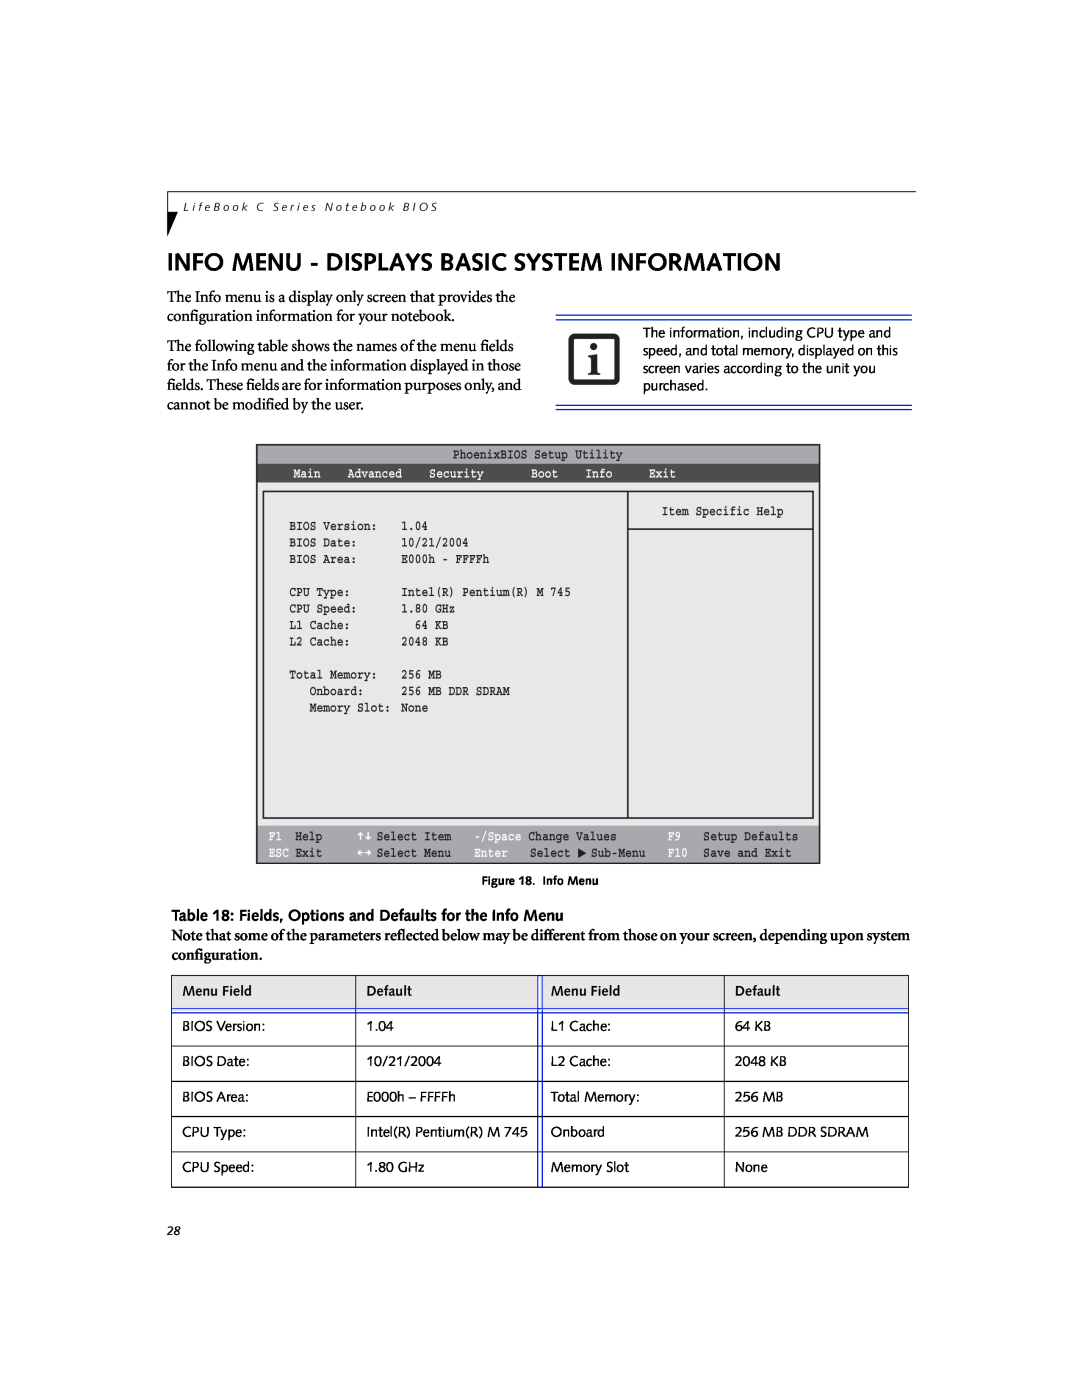 Fujitsu C2330 manual Info Menu - Displays Basic System Information, Fields, Options and Defaults for the Info Menu 